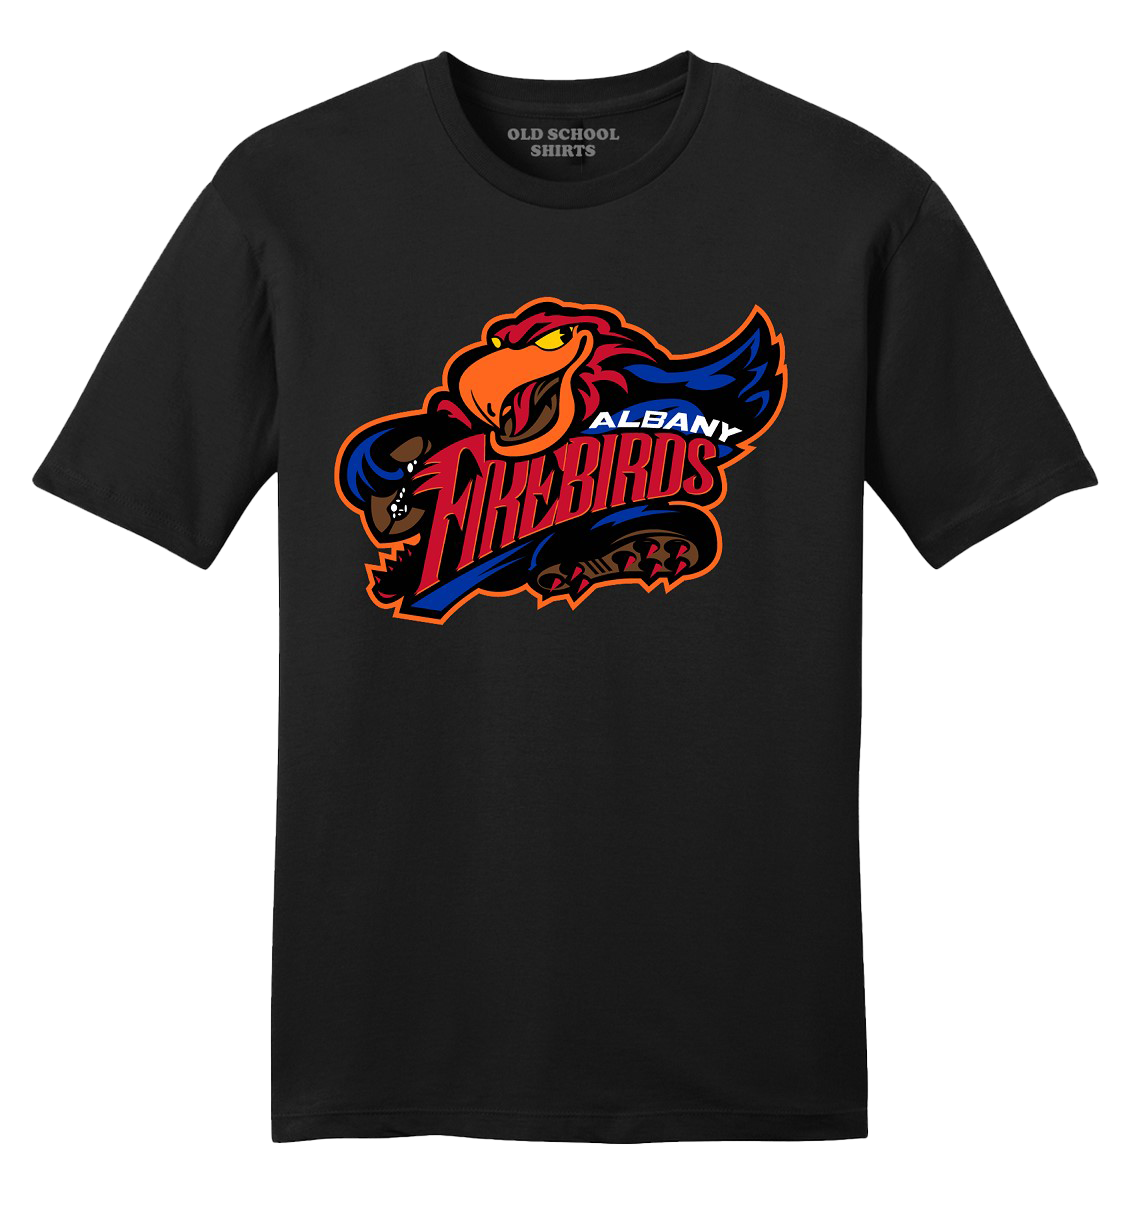 Albany Firebirds T-shirt